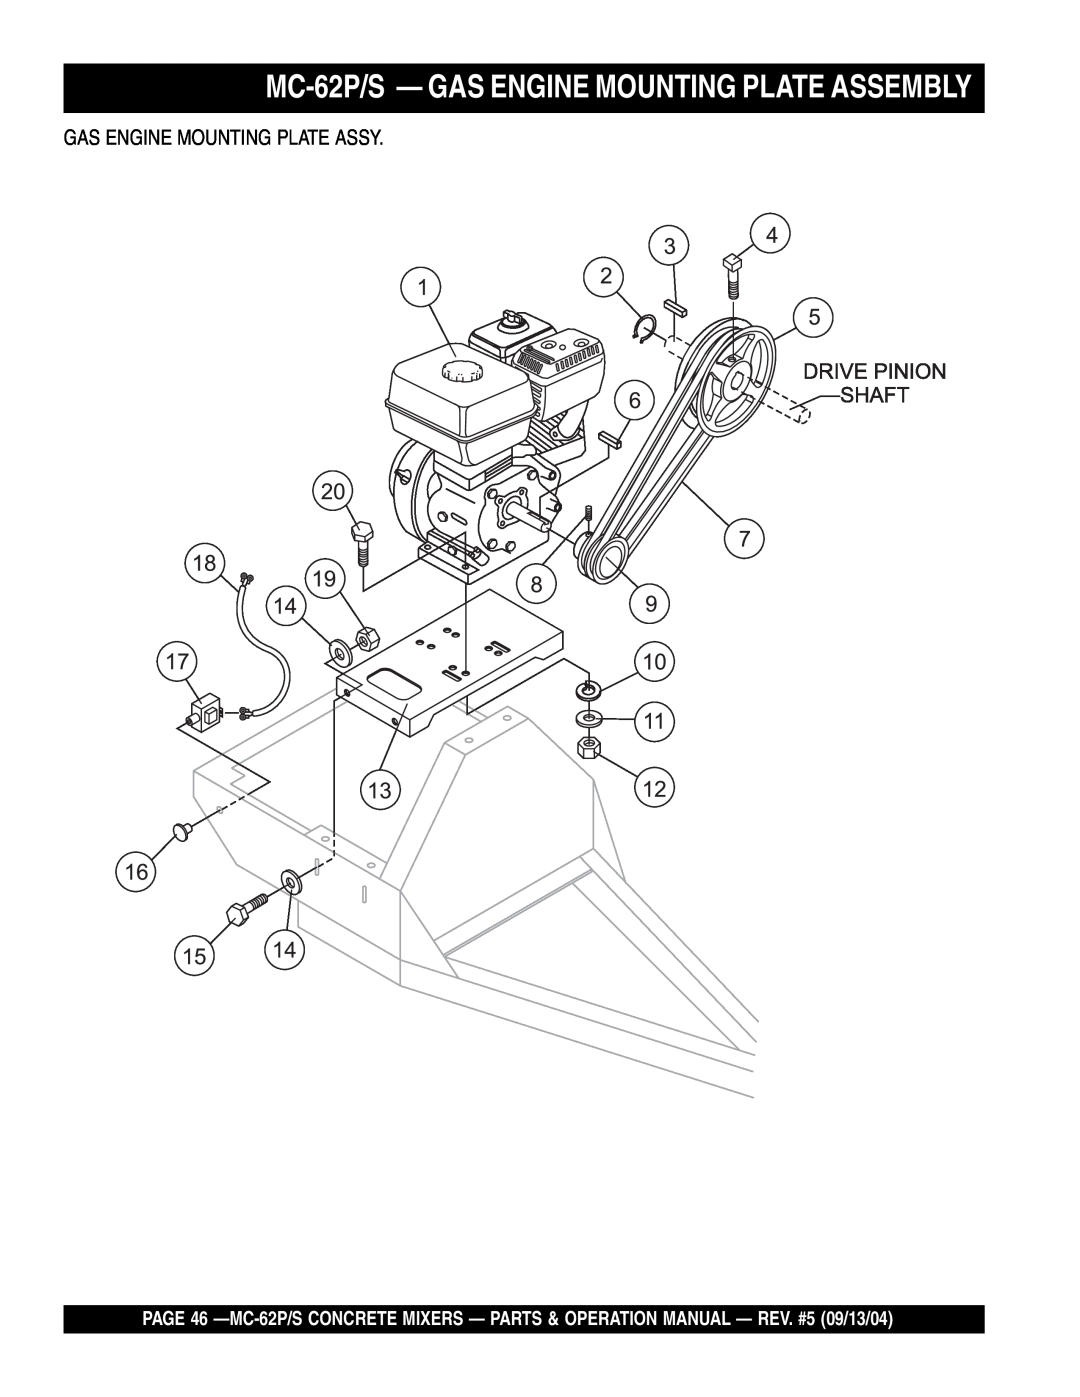 Multiquip MC-62S manual MC-62P/S - GAS ENGINE MOUNTING PLATE ASSEMBLY, Gas Engine Mounting Plate Assy 